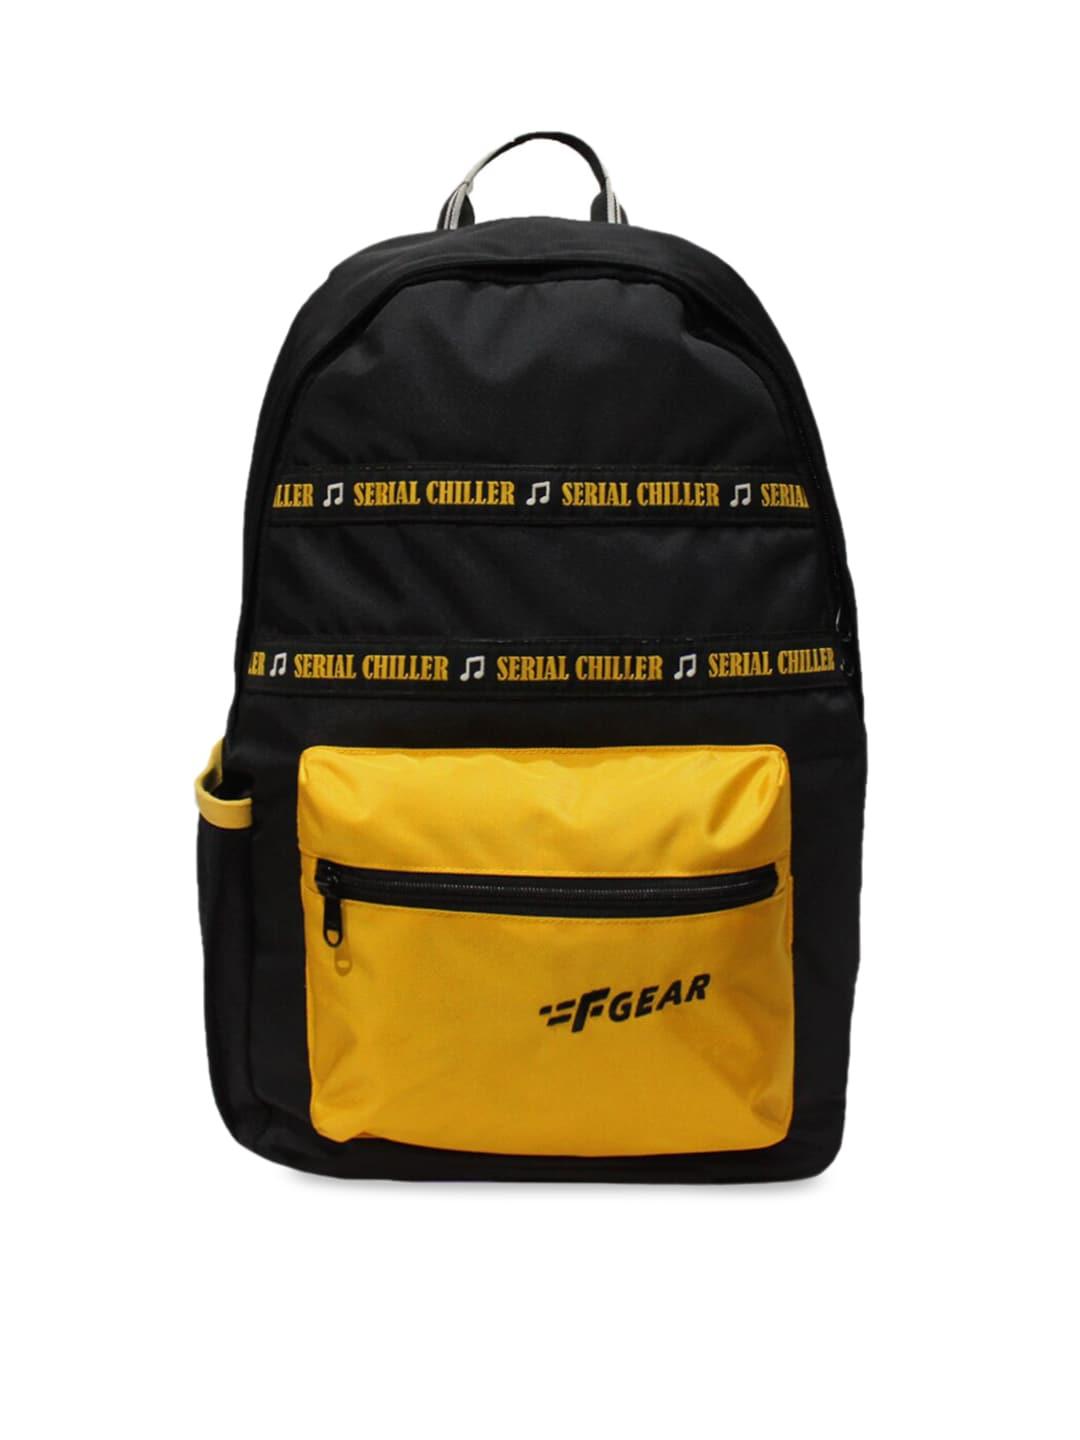 f gear unisex black & yellow colourblocked medium backpack